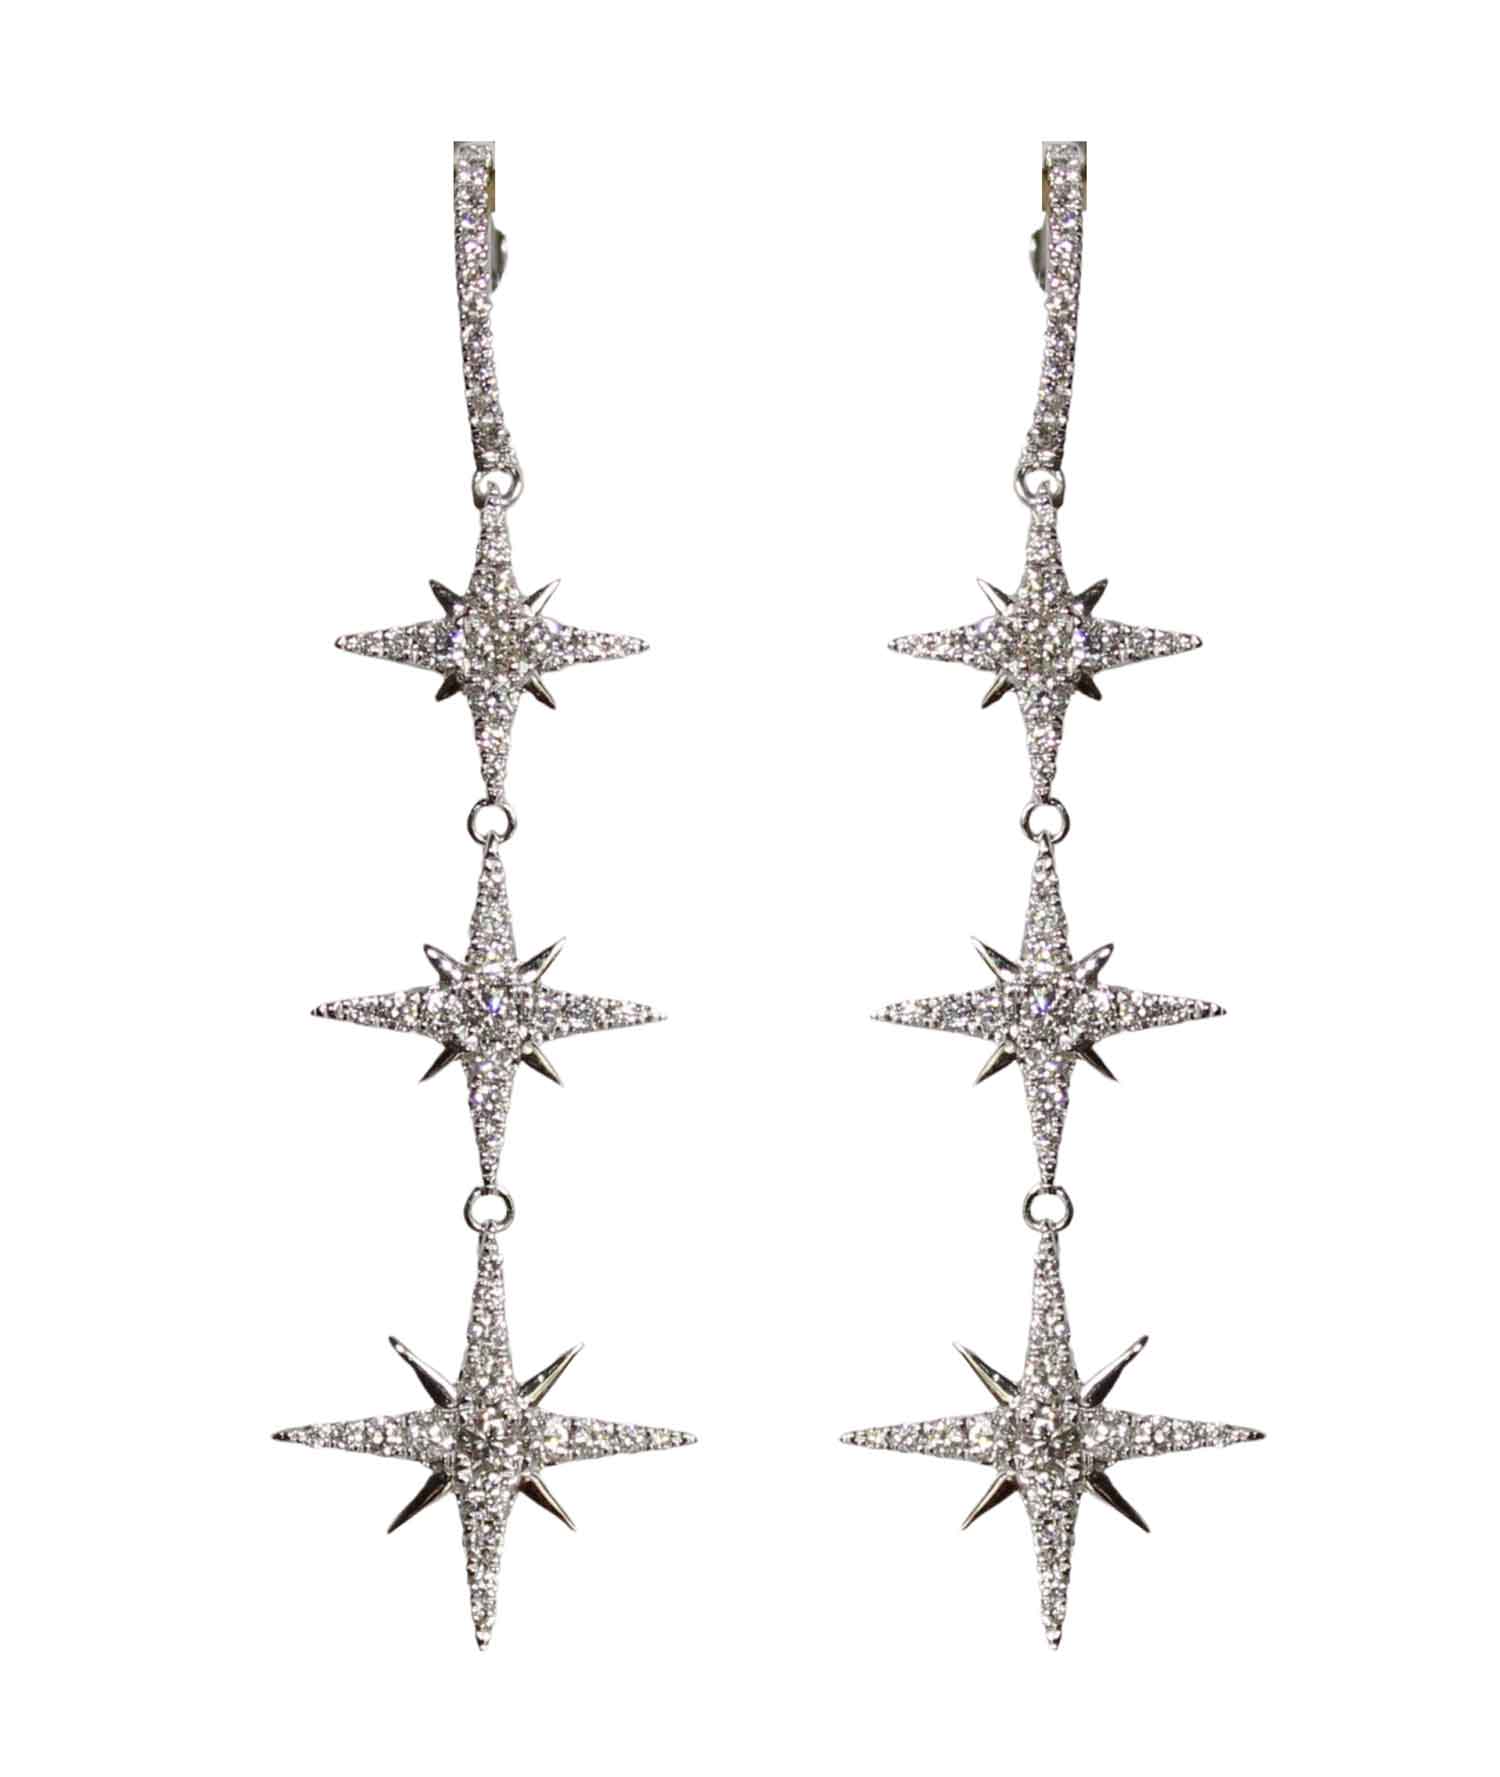 Stardust - 18K gold and diamond earrings